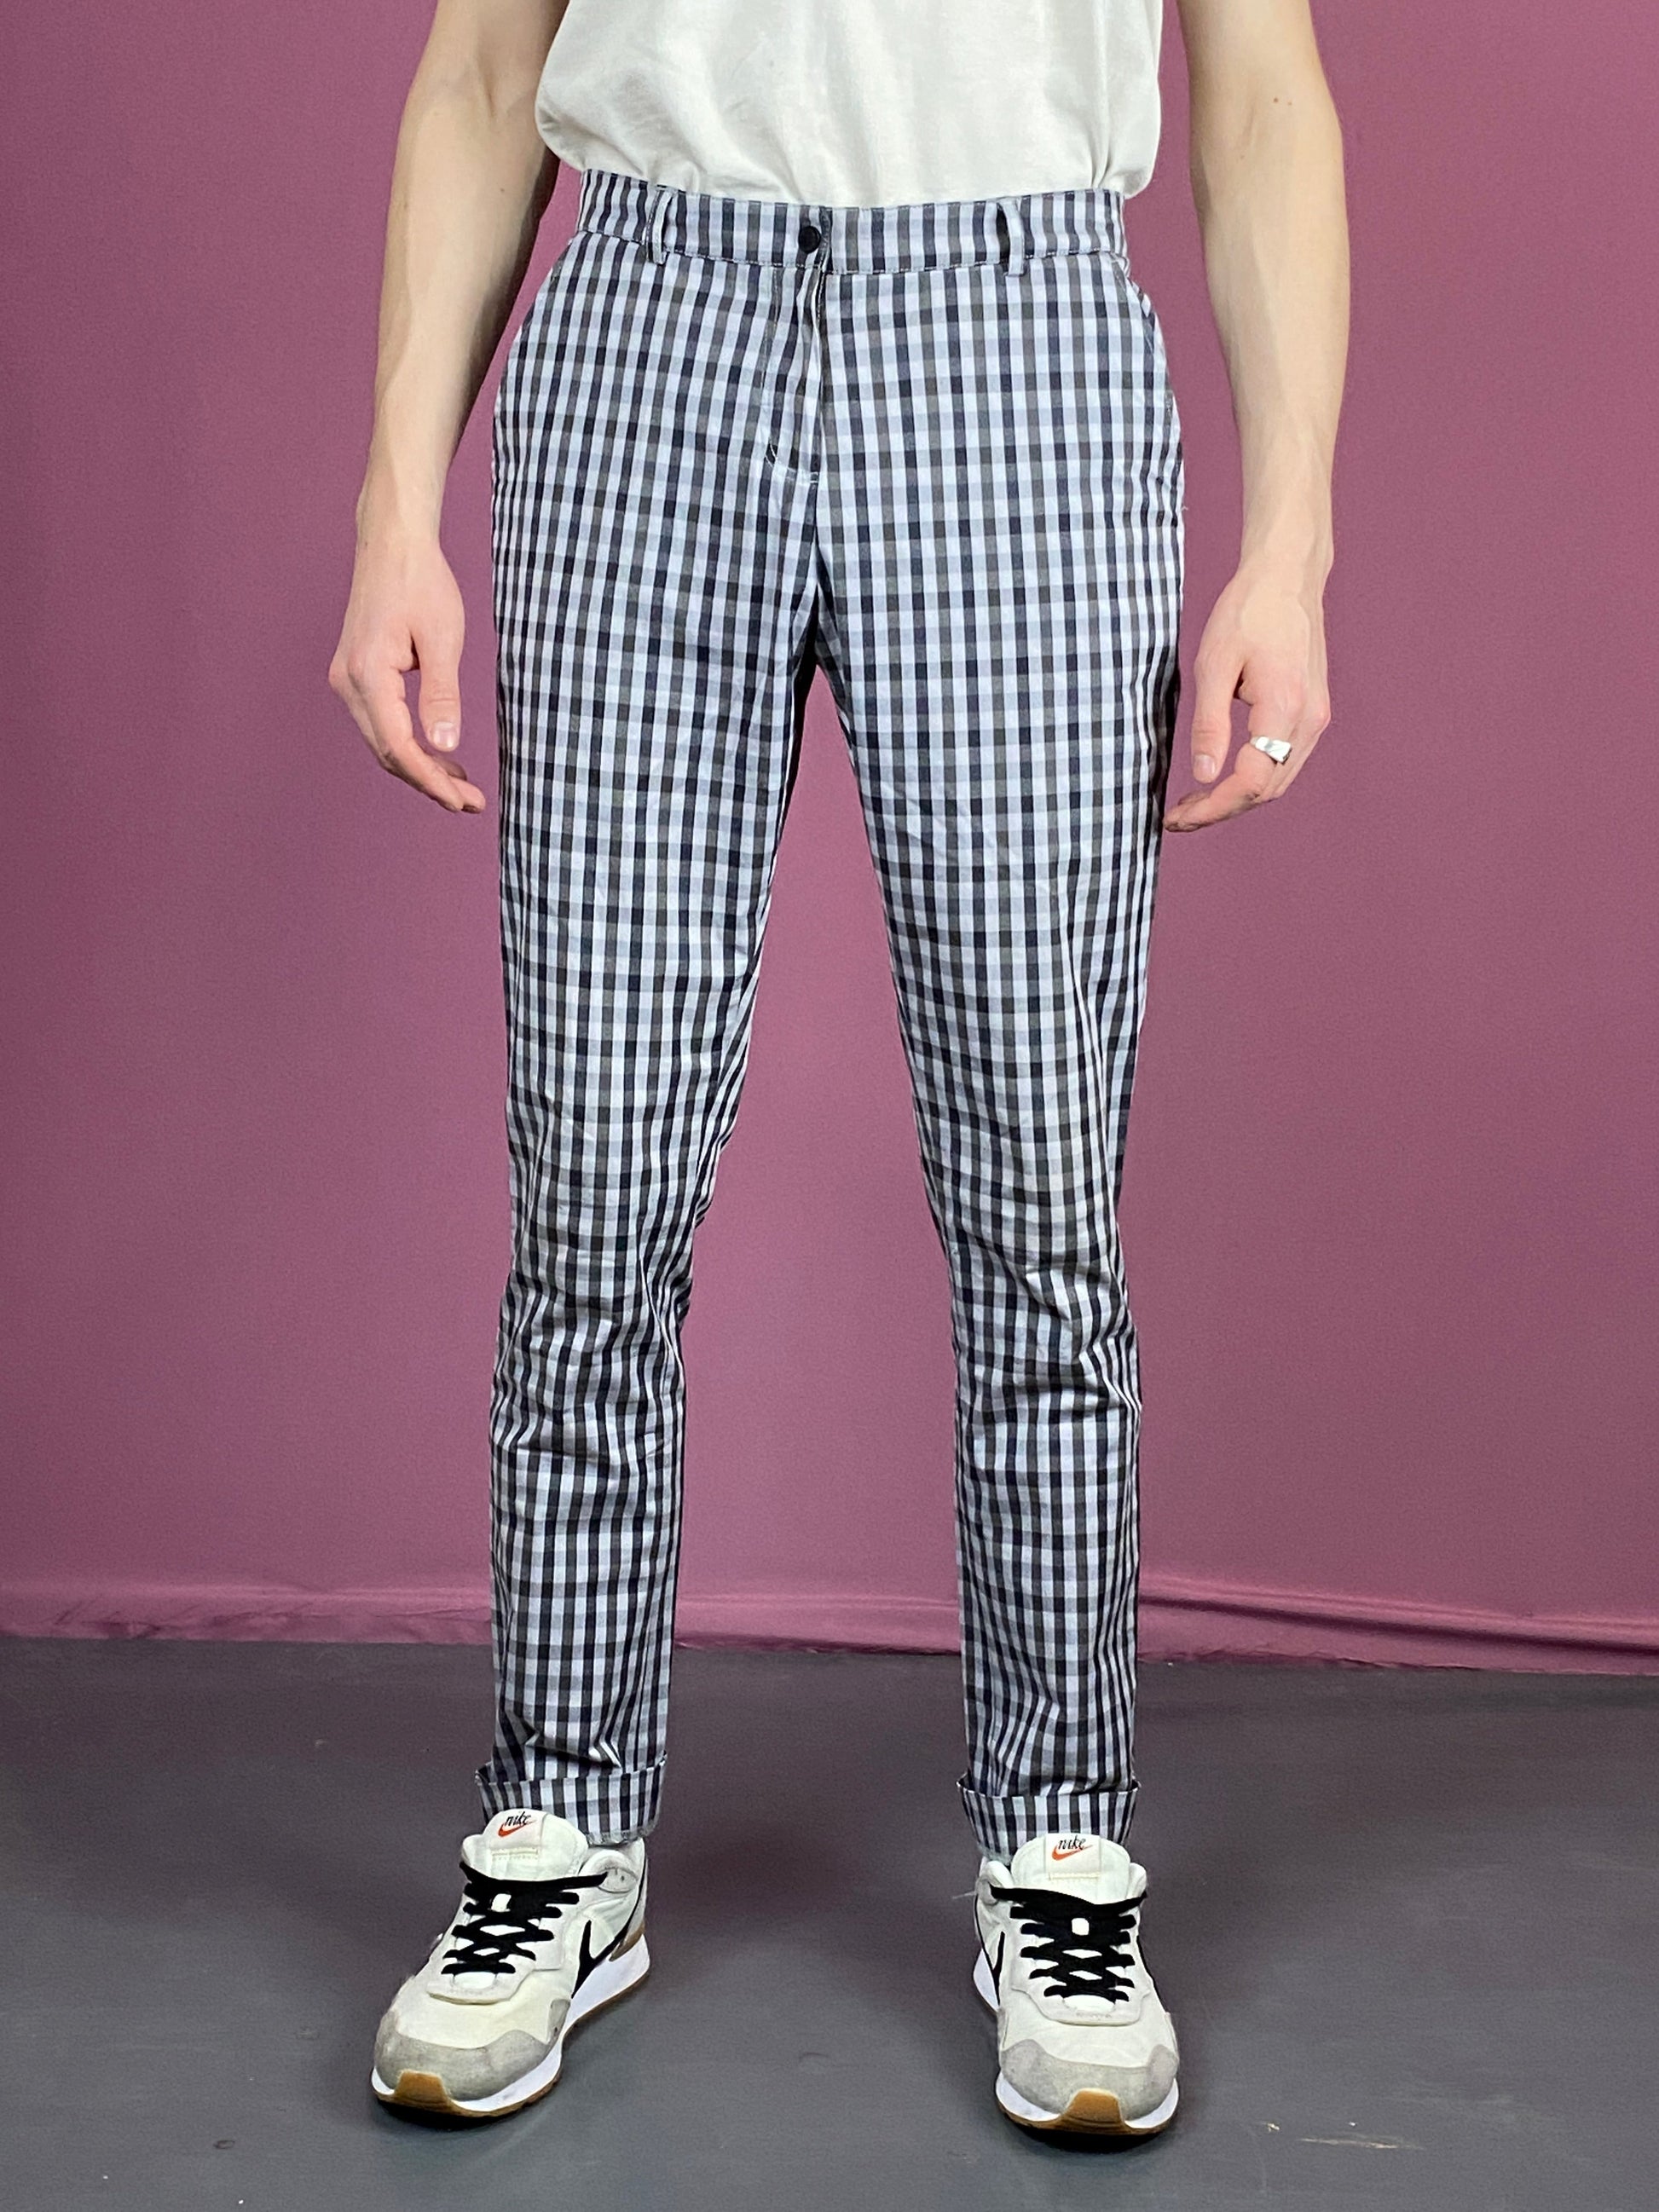 Aquascutum Men's Chino Pants - Small Gray Cotton